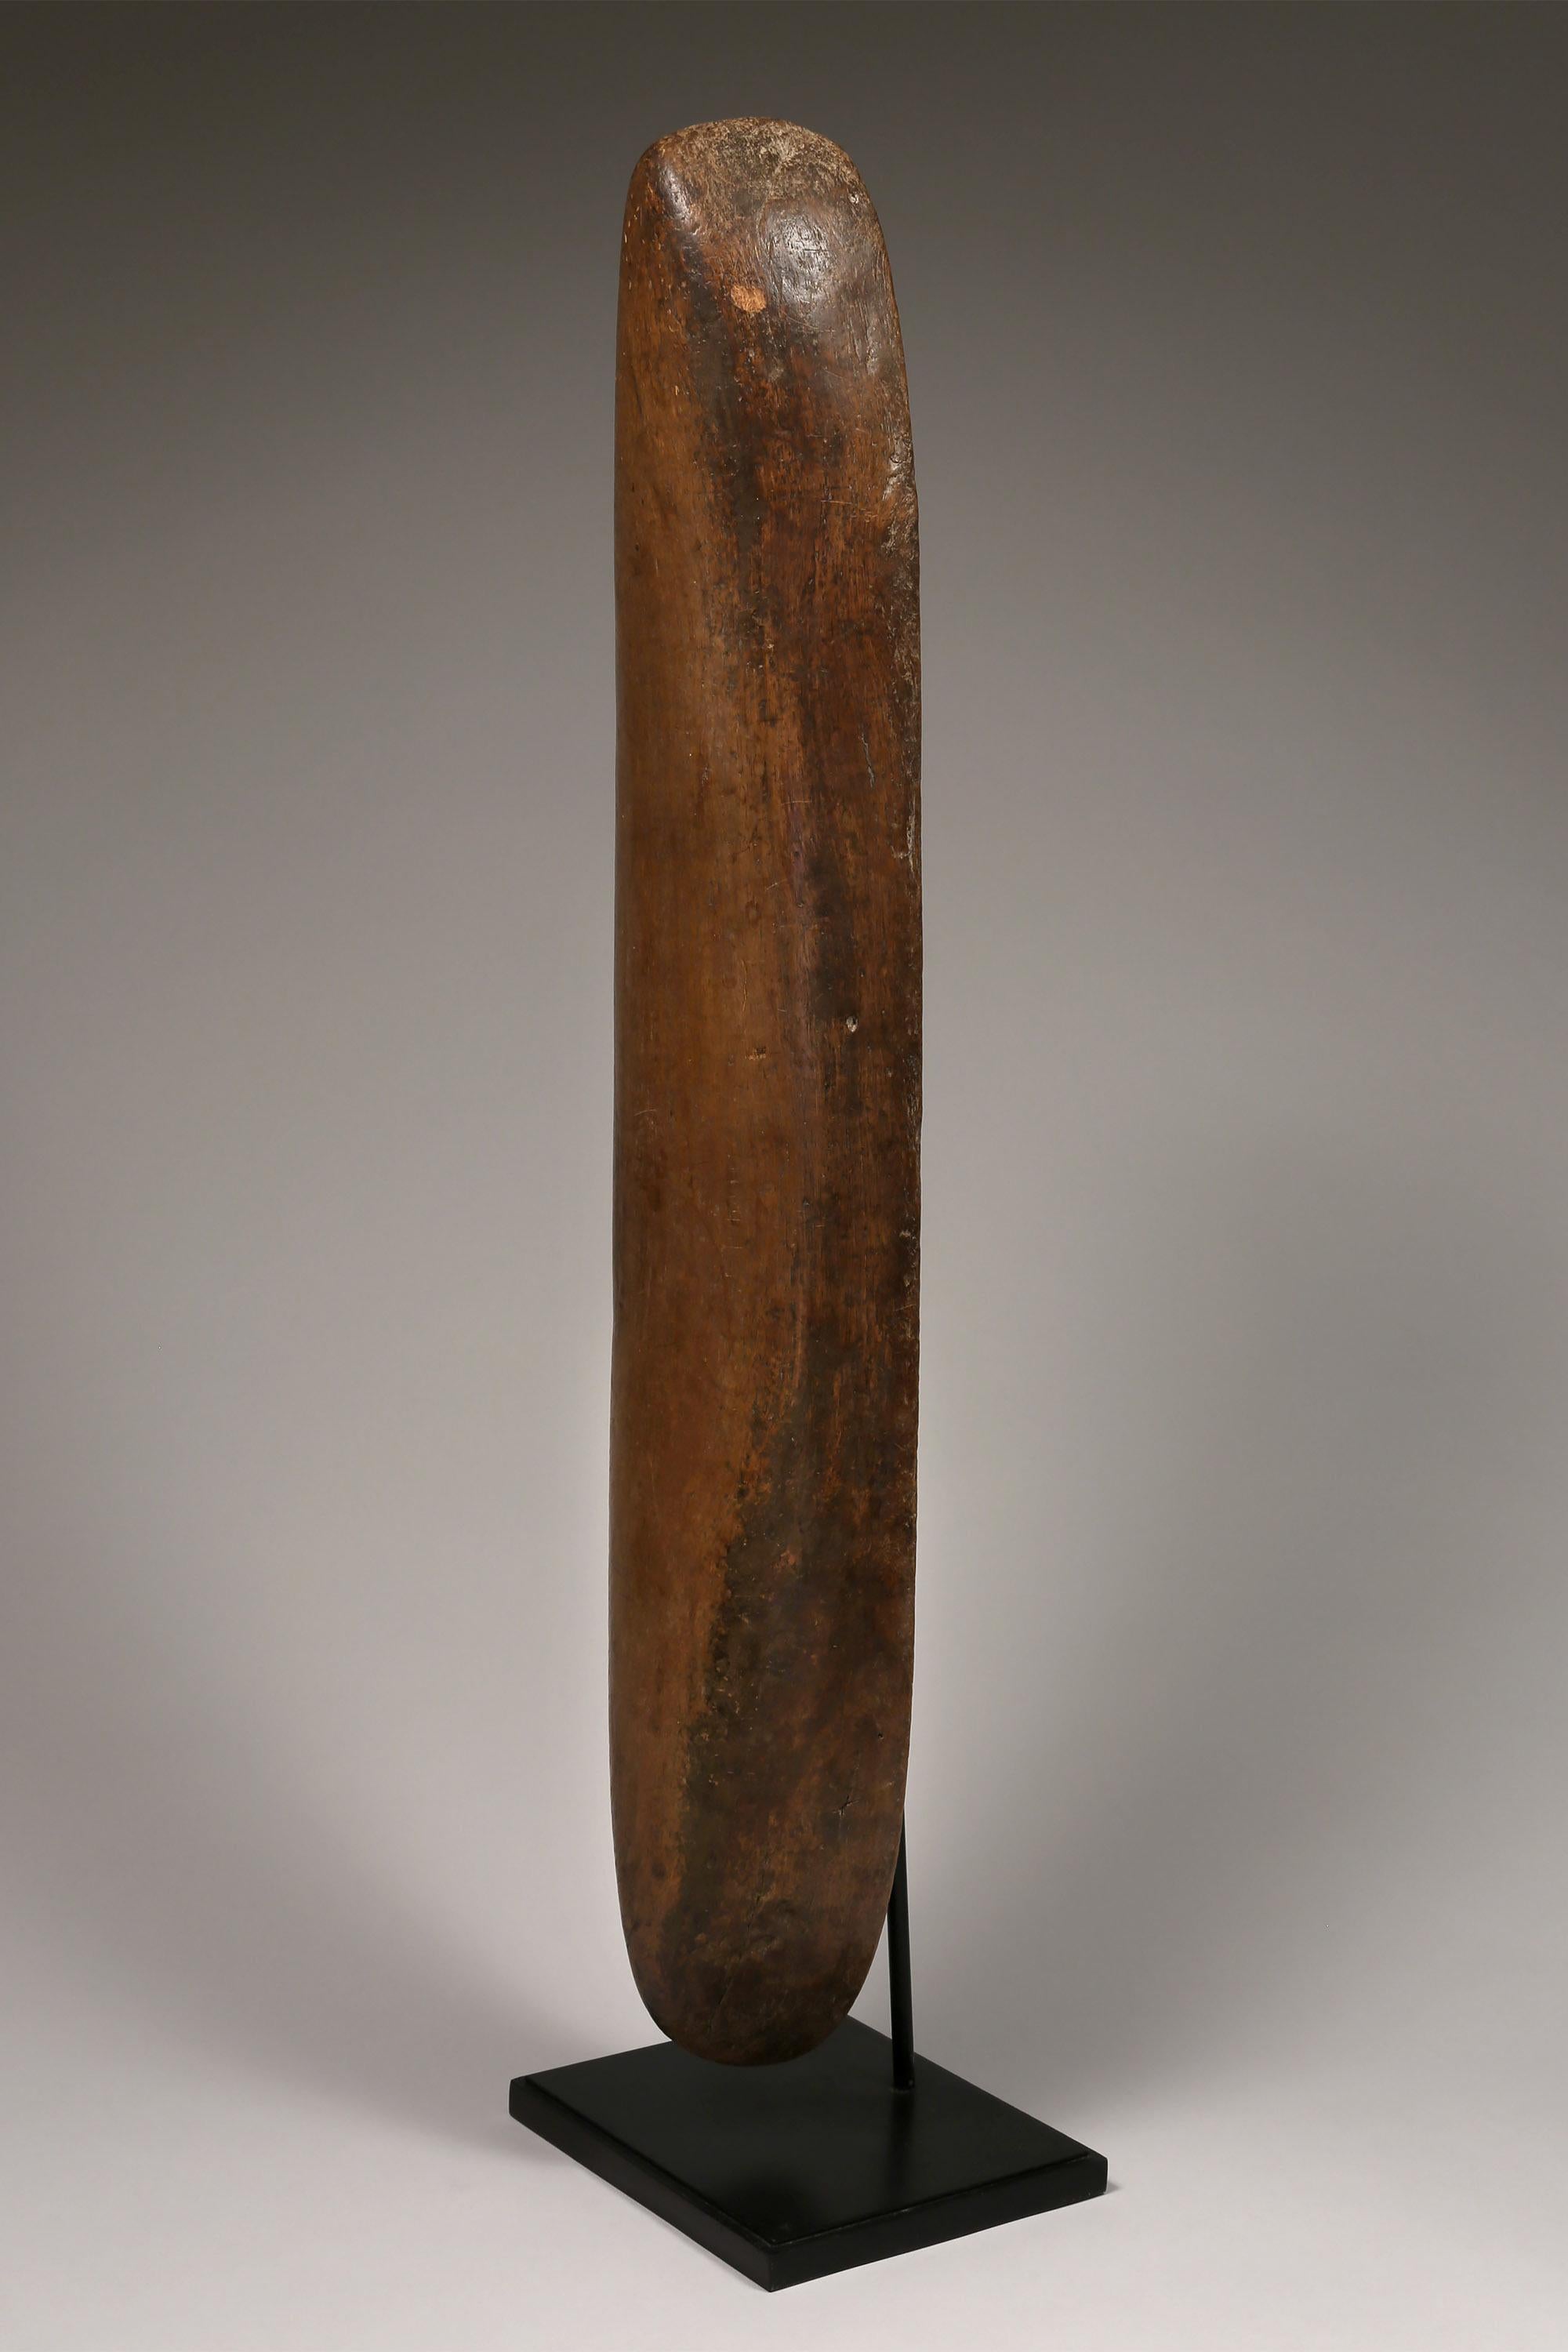 Mossi wood headrest from Burkina Faso, early 20th century.